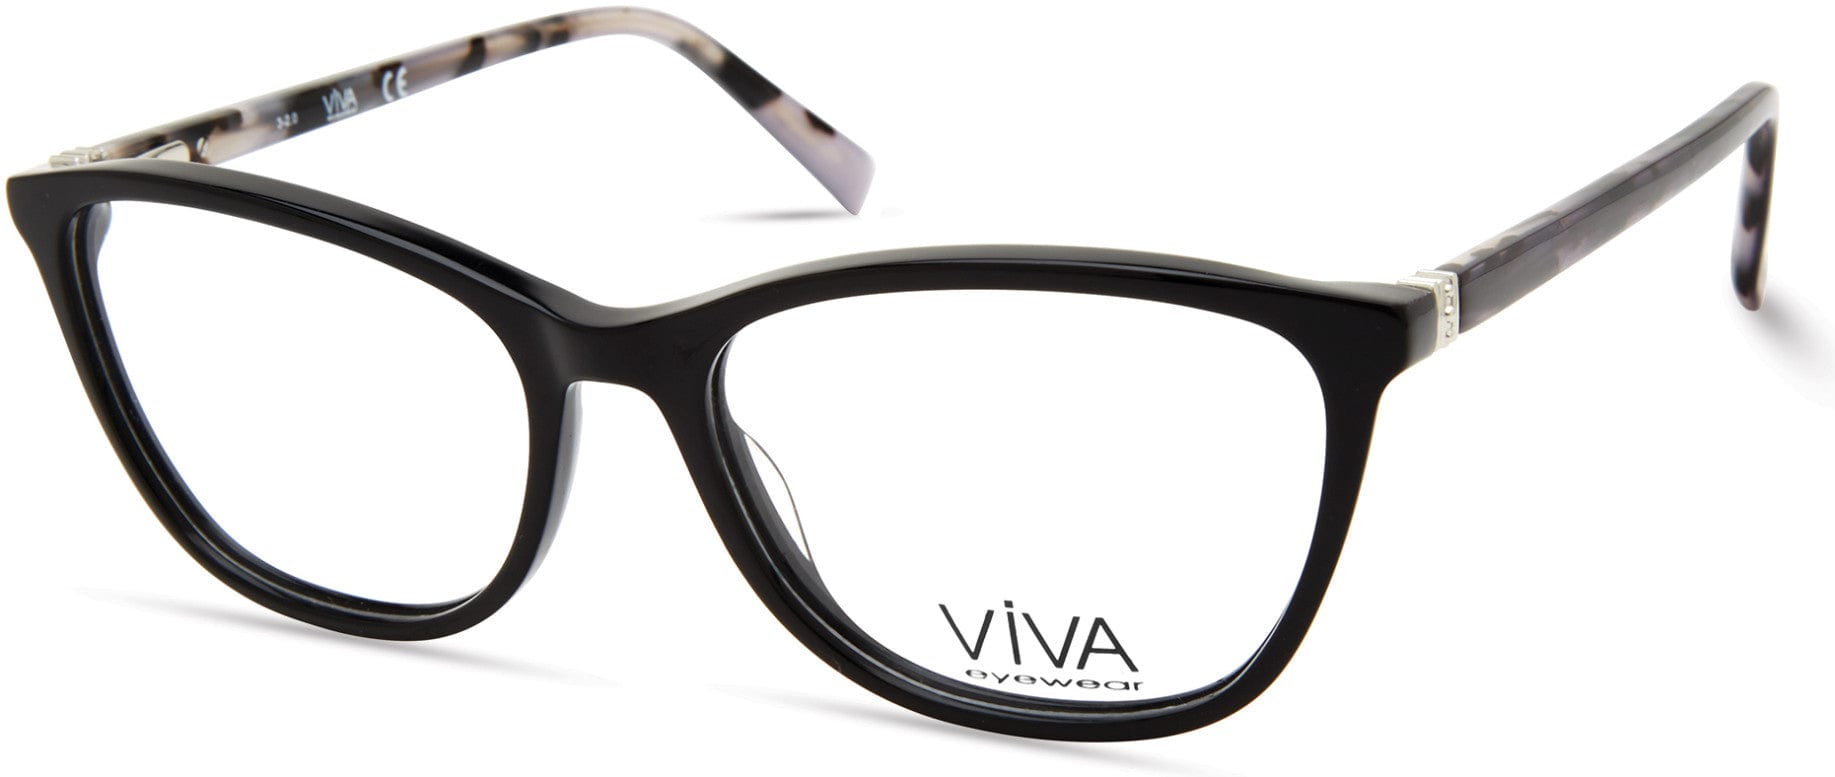 Viva VV4525 Square Eyeglasses 001-001 - Shiny Black